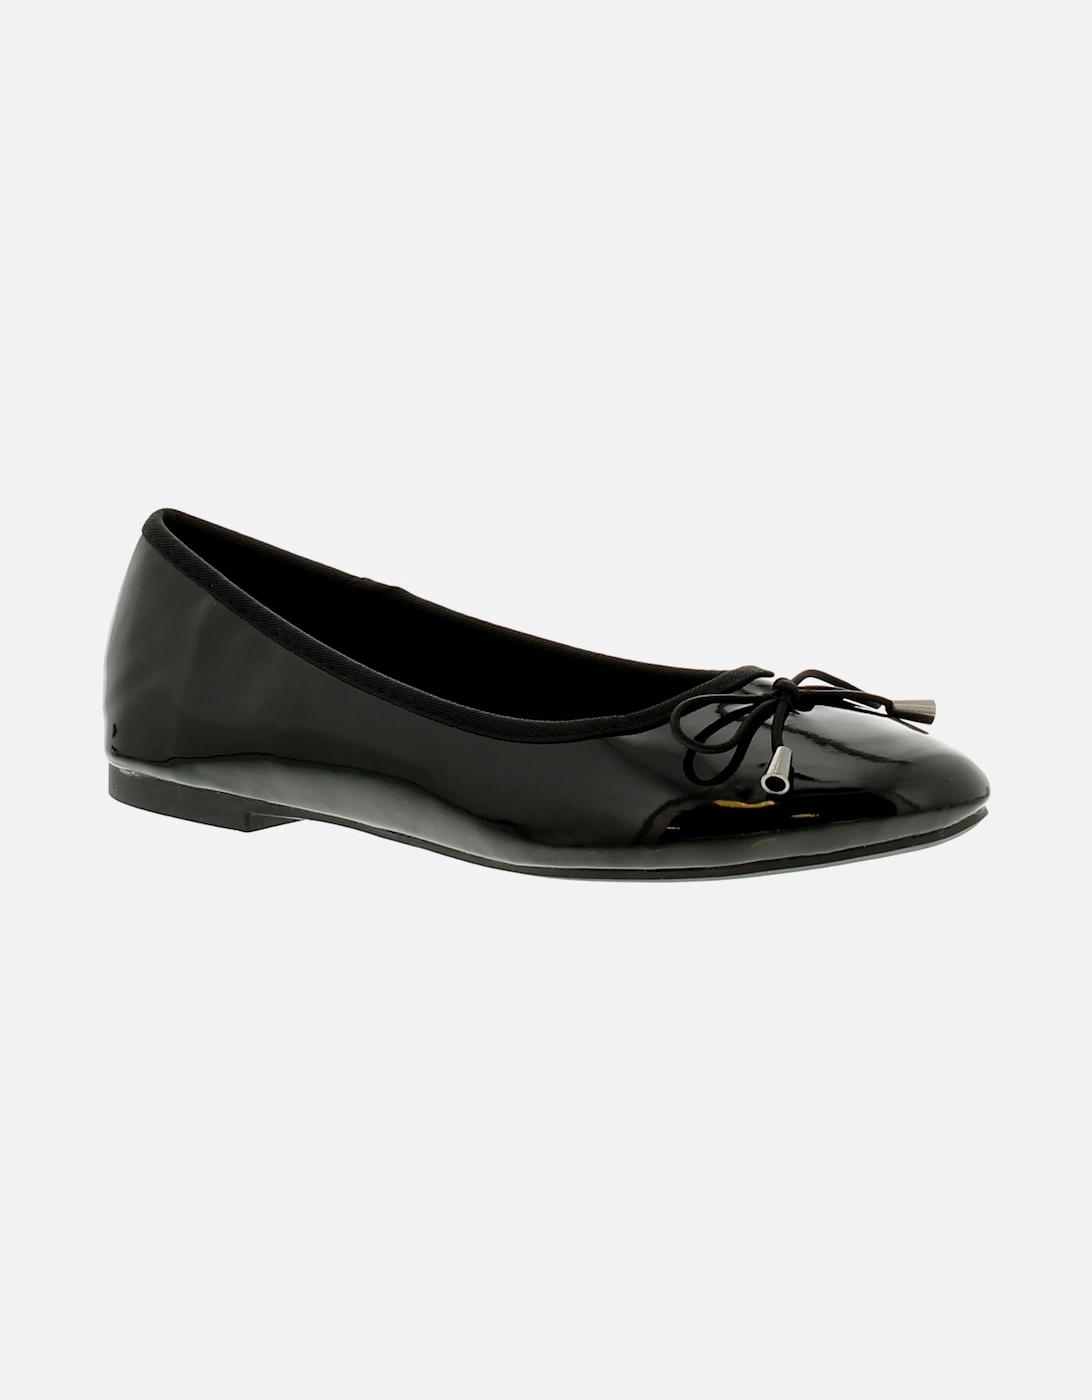 Womens Flat Shoes Brittany 2 Slip On black UK Size, 6 of 5